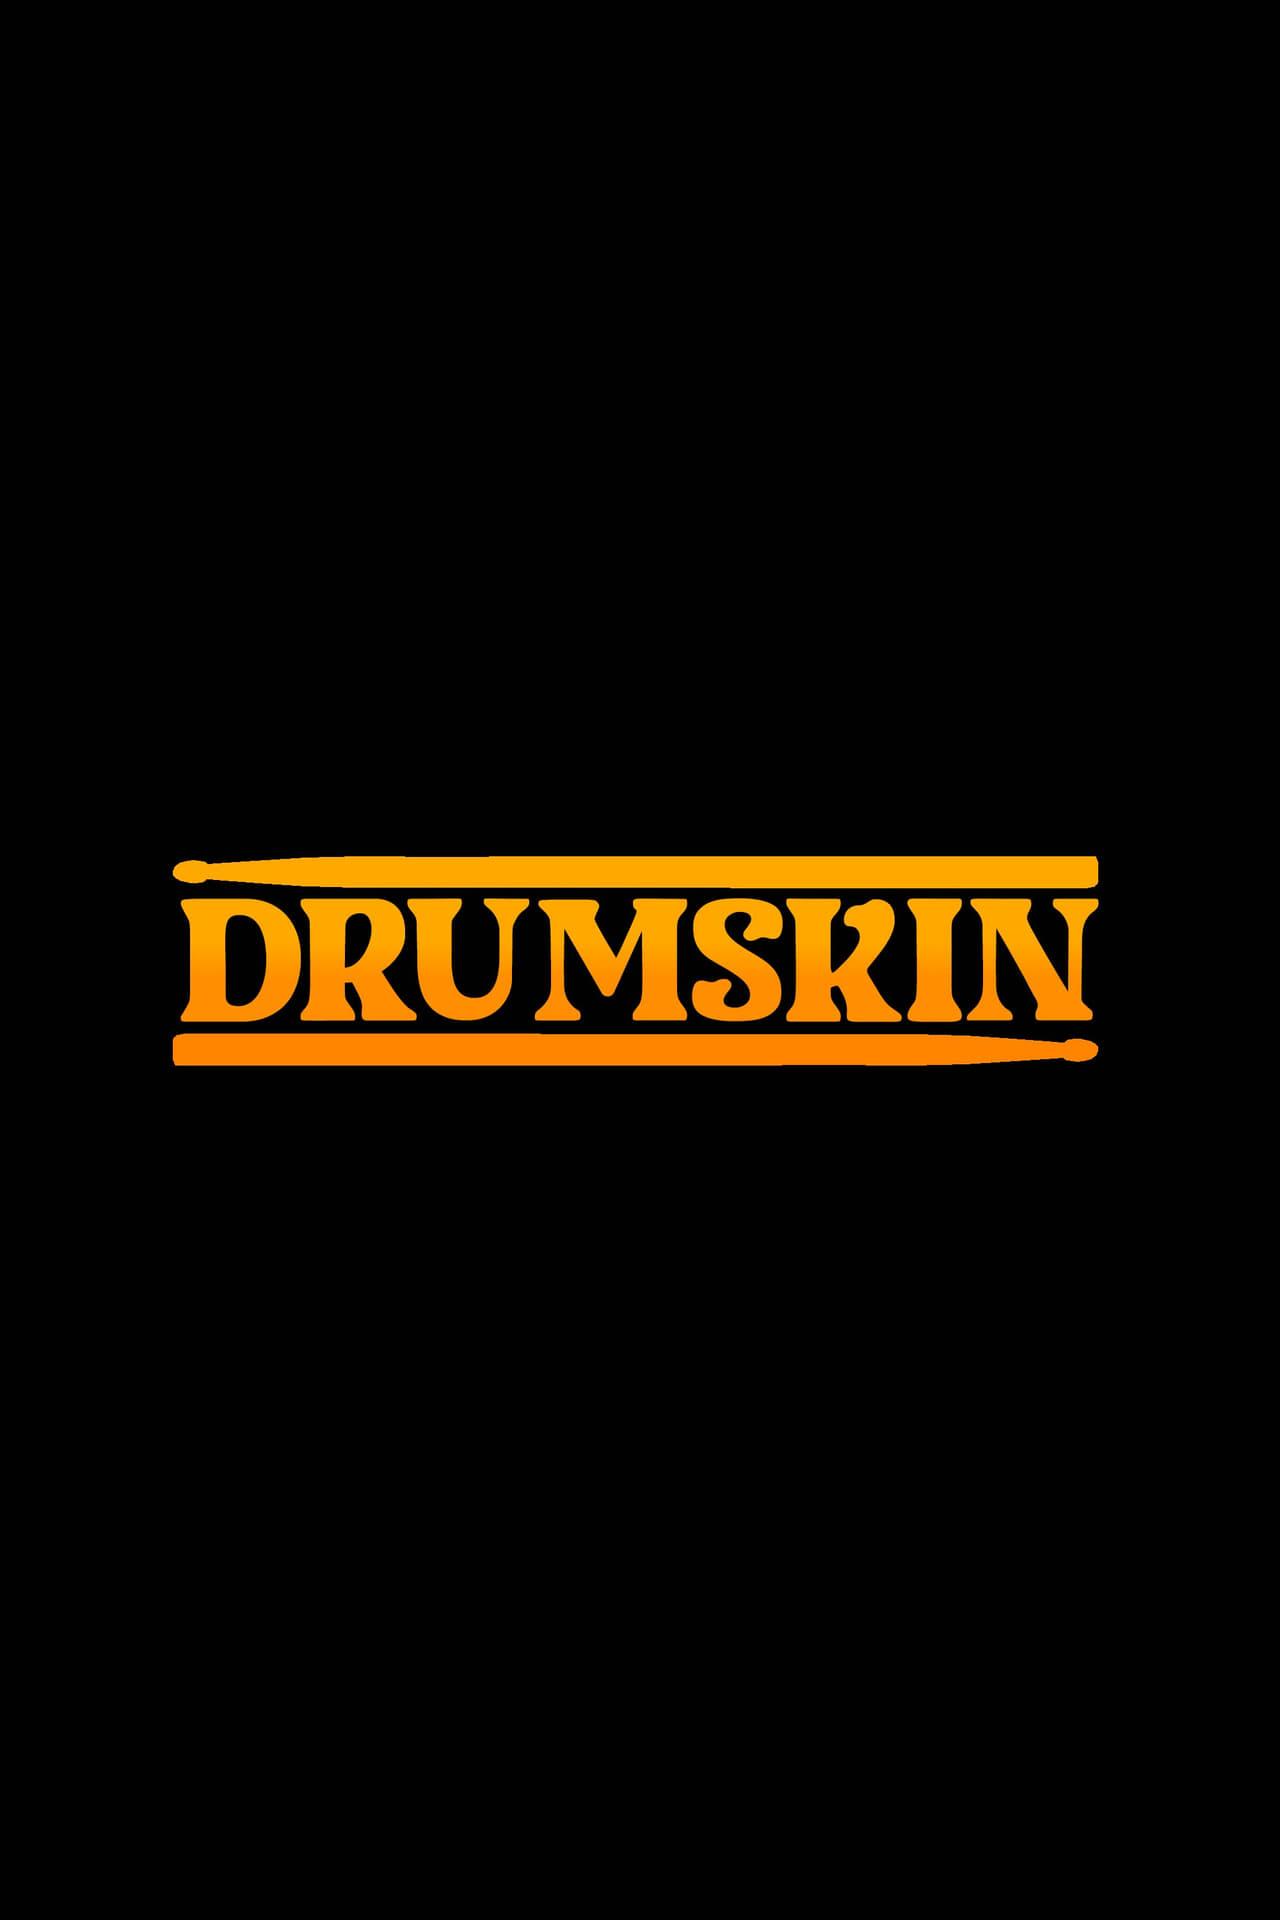 Drumskin poster